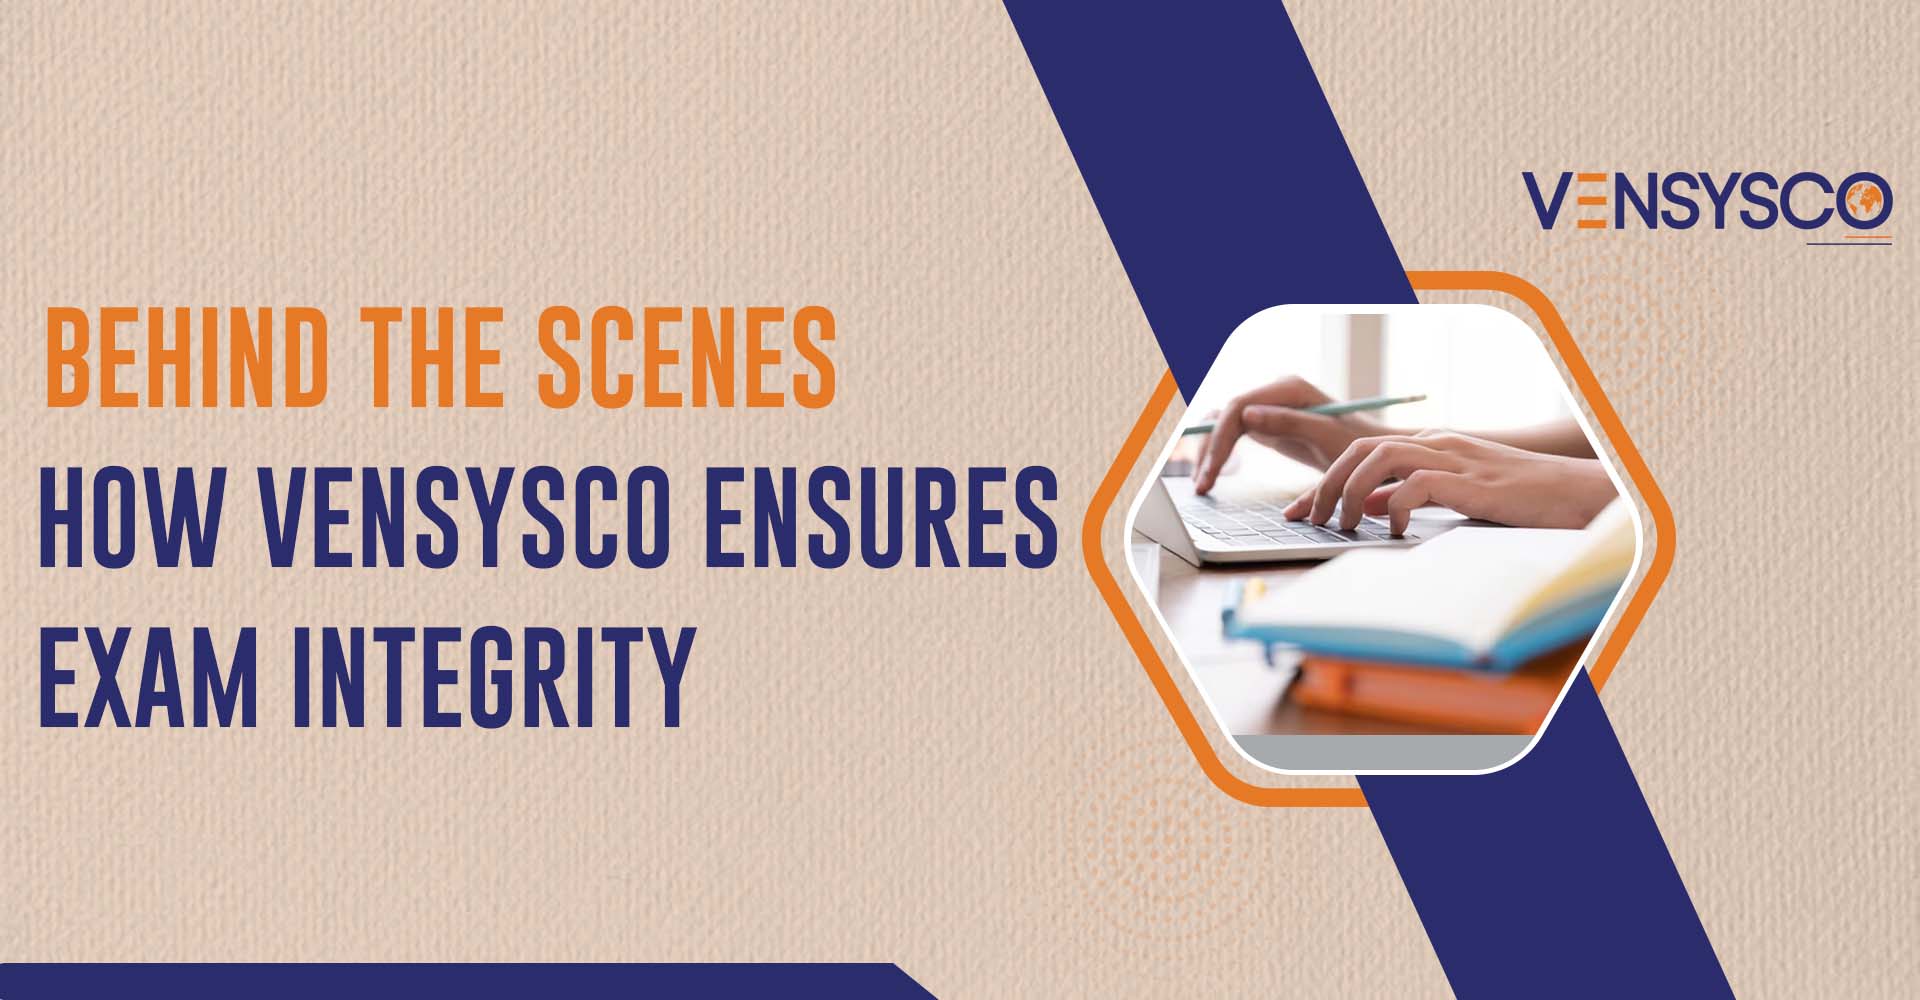 Behind the Scenes: How Vensysco Ensures Exam Integrity